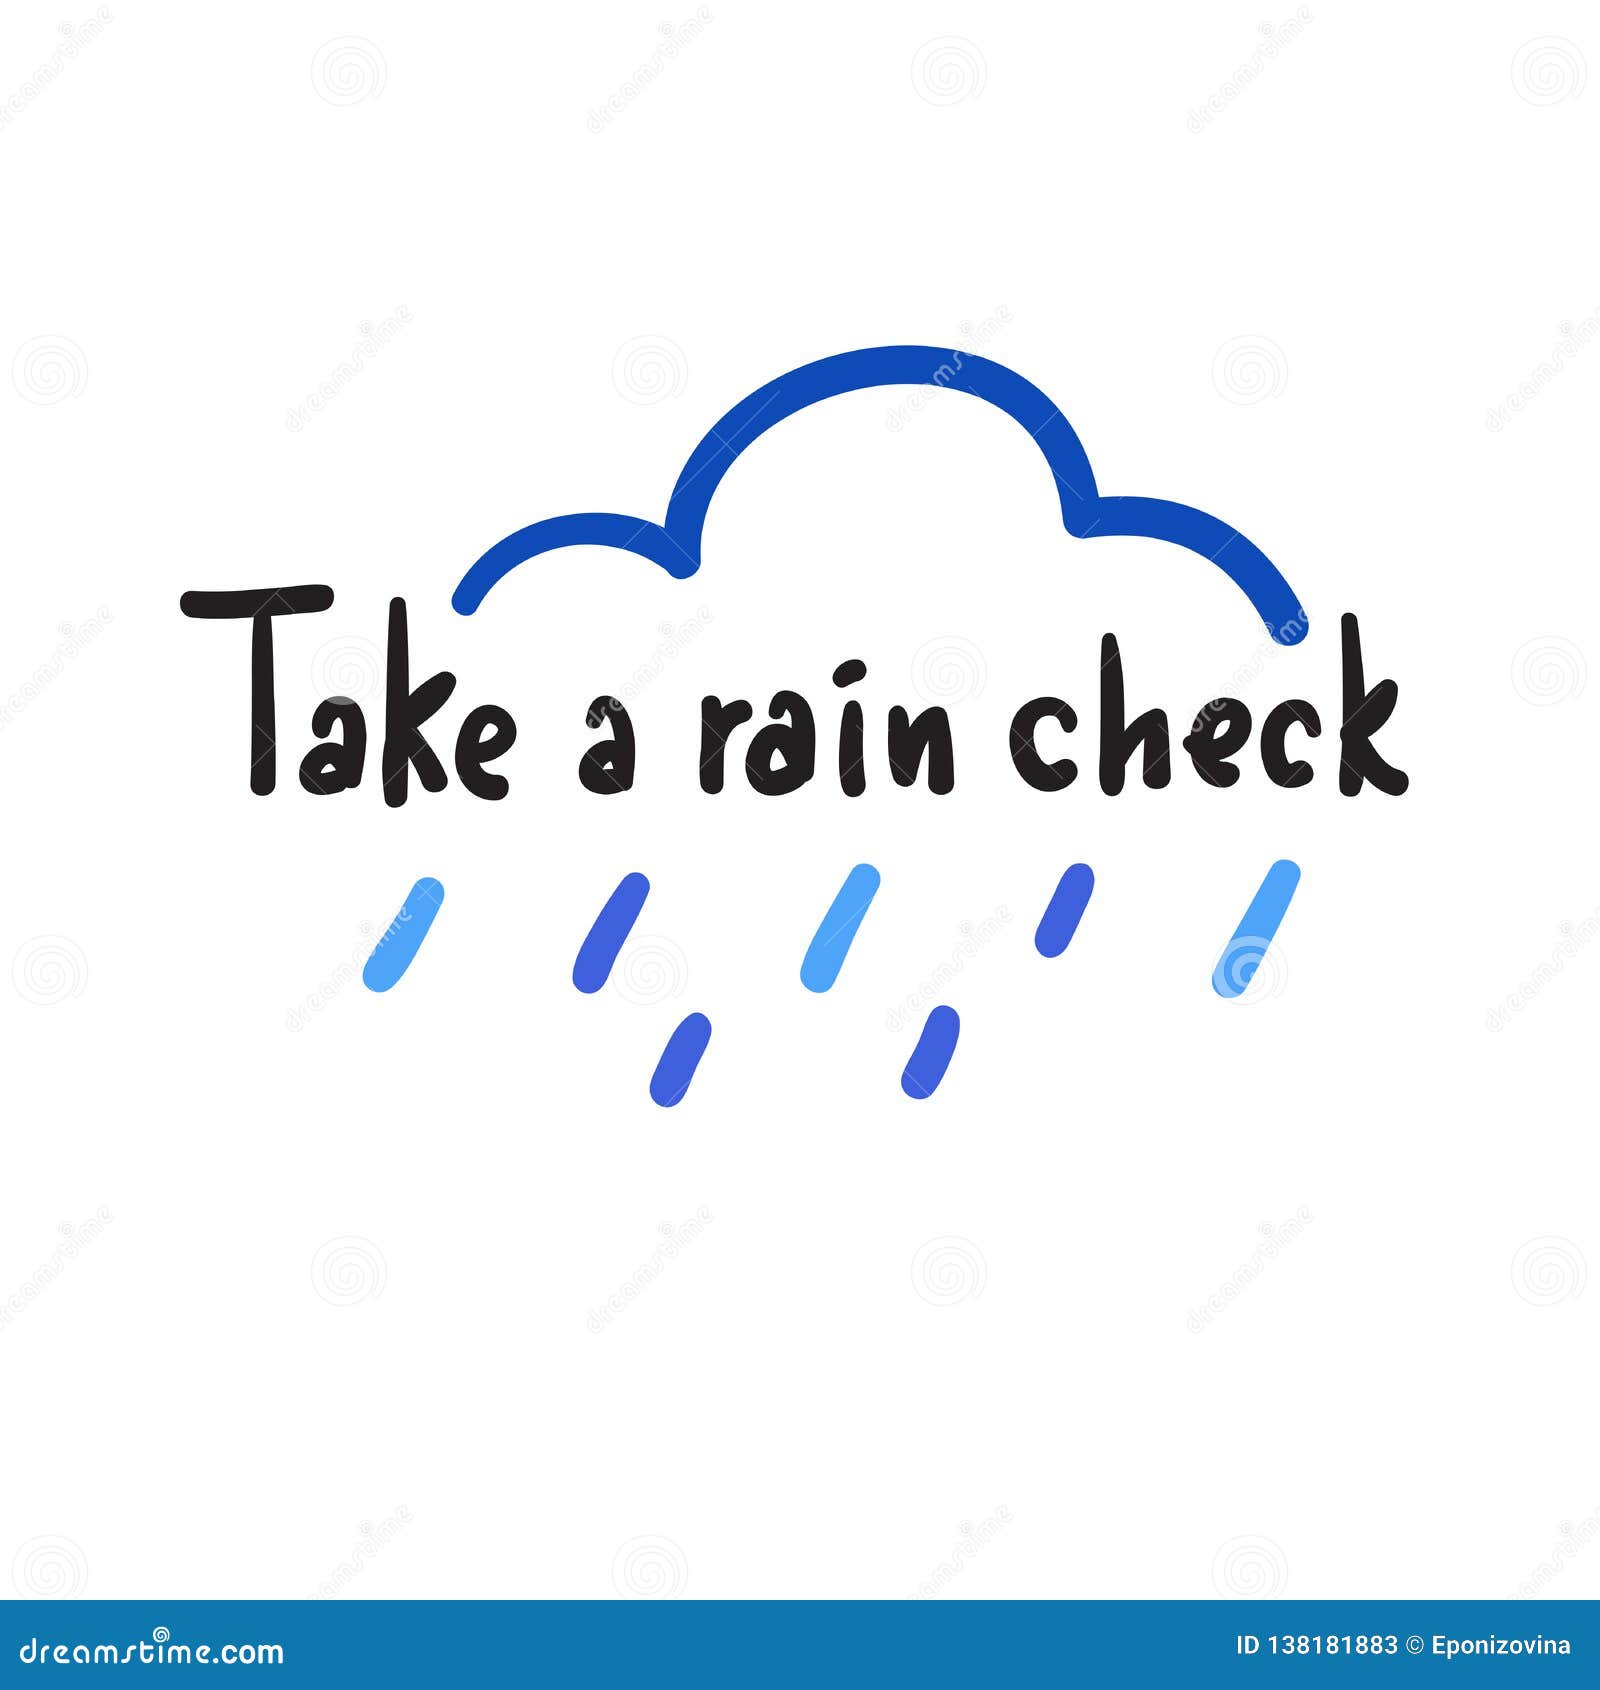 Take a rain check. Rain check. Rain check идиома. Rain check перевод идиомы.